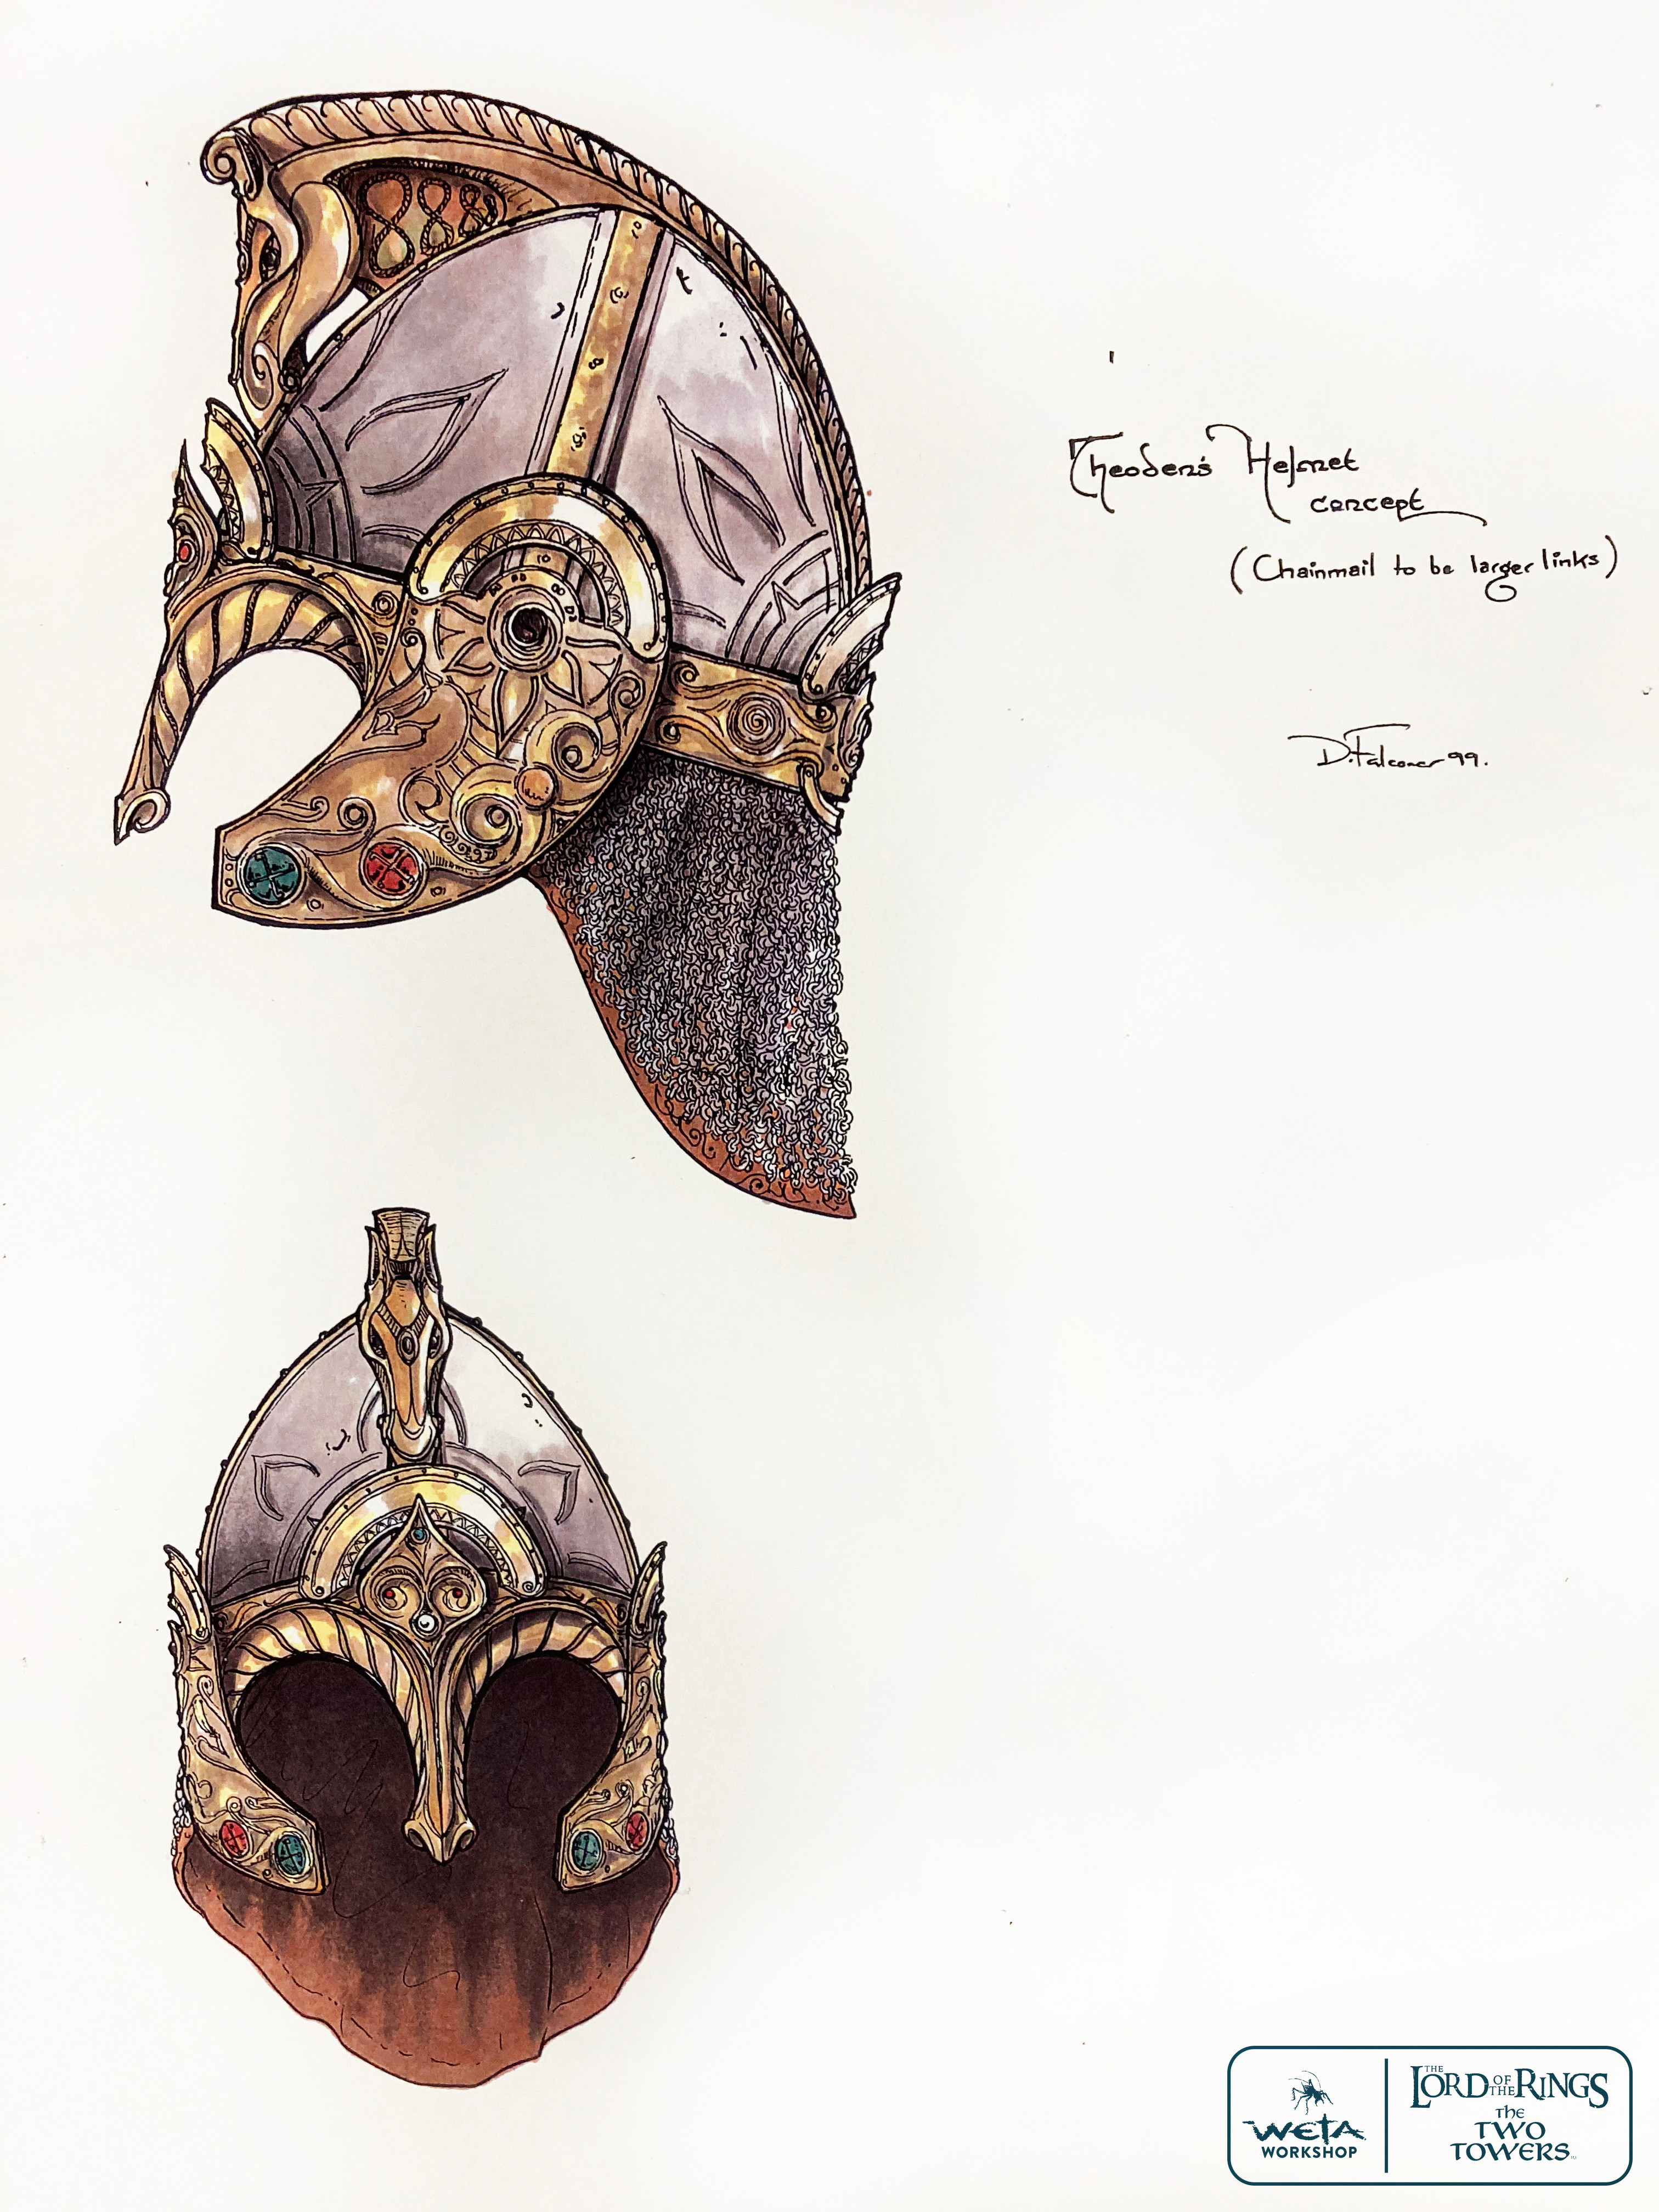 Theoden Helmet - Artist: Daniel Falconer